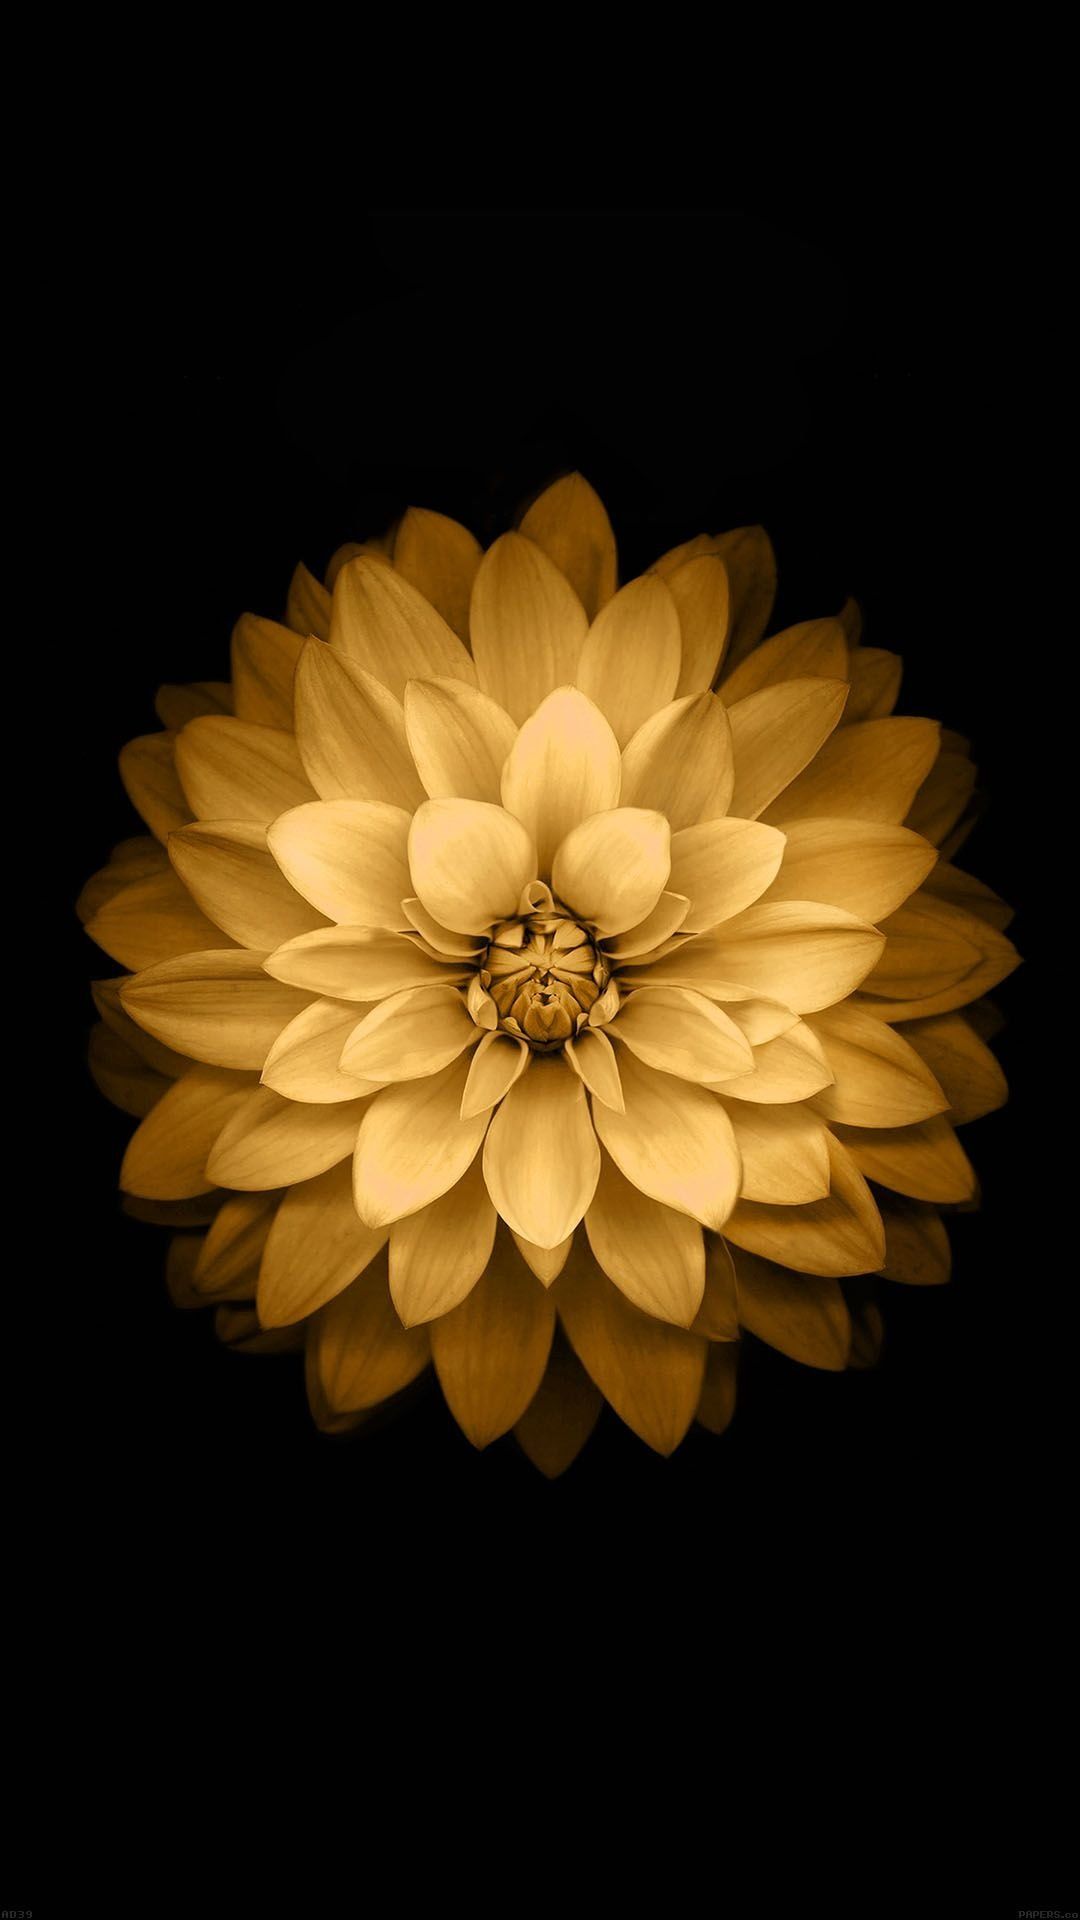 Flower Wallpaper For iPhone 7 Pluss